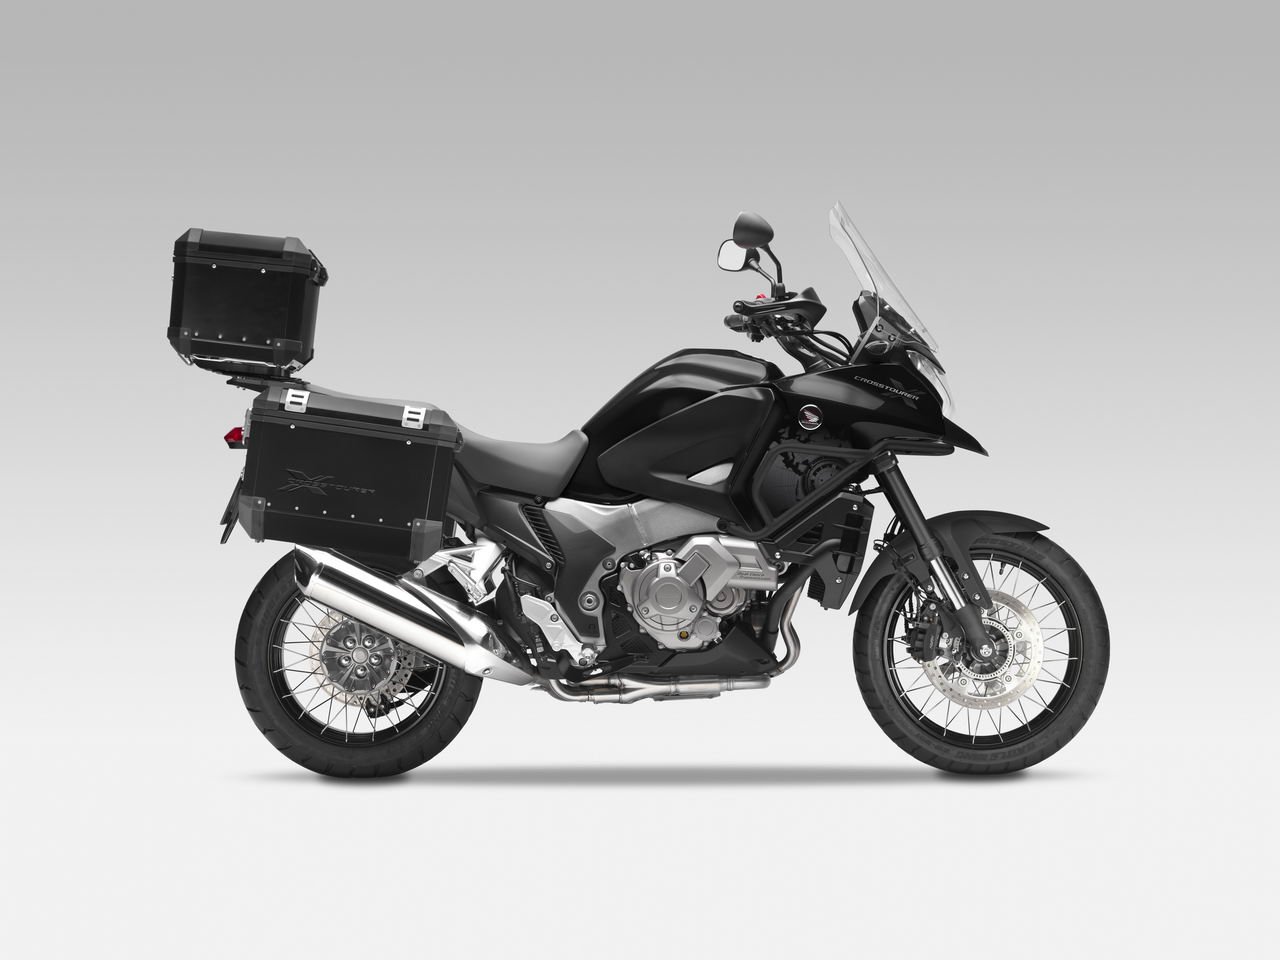 Listino Honda CRF 250M Supermotard - image 14674_honda-crosstourerabs-dct-le on https://moto.motori.net